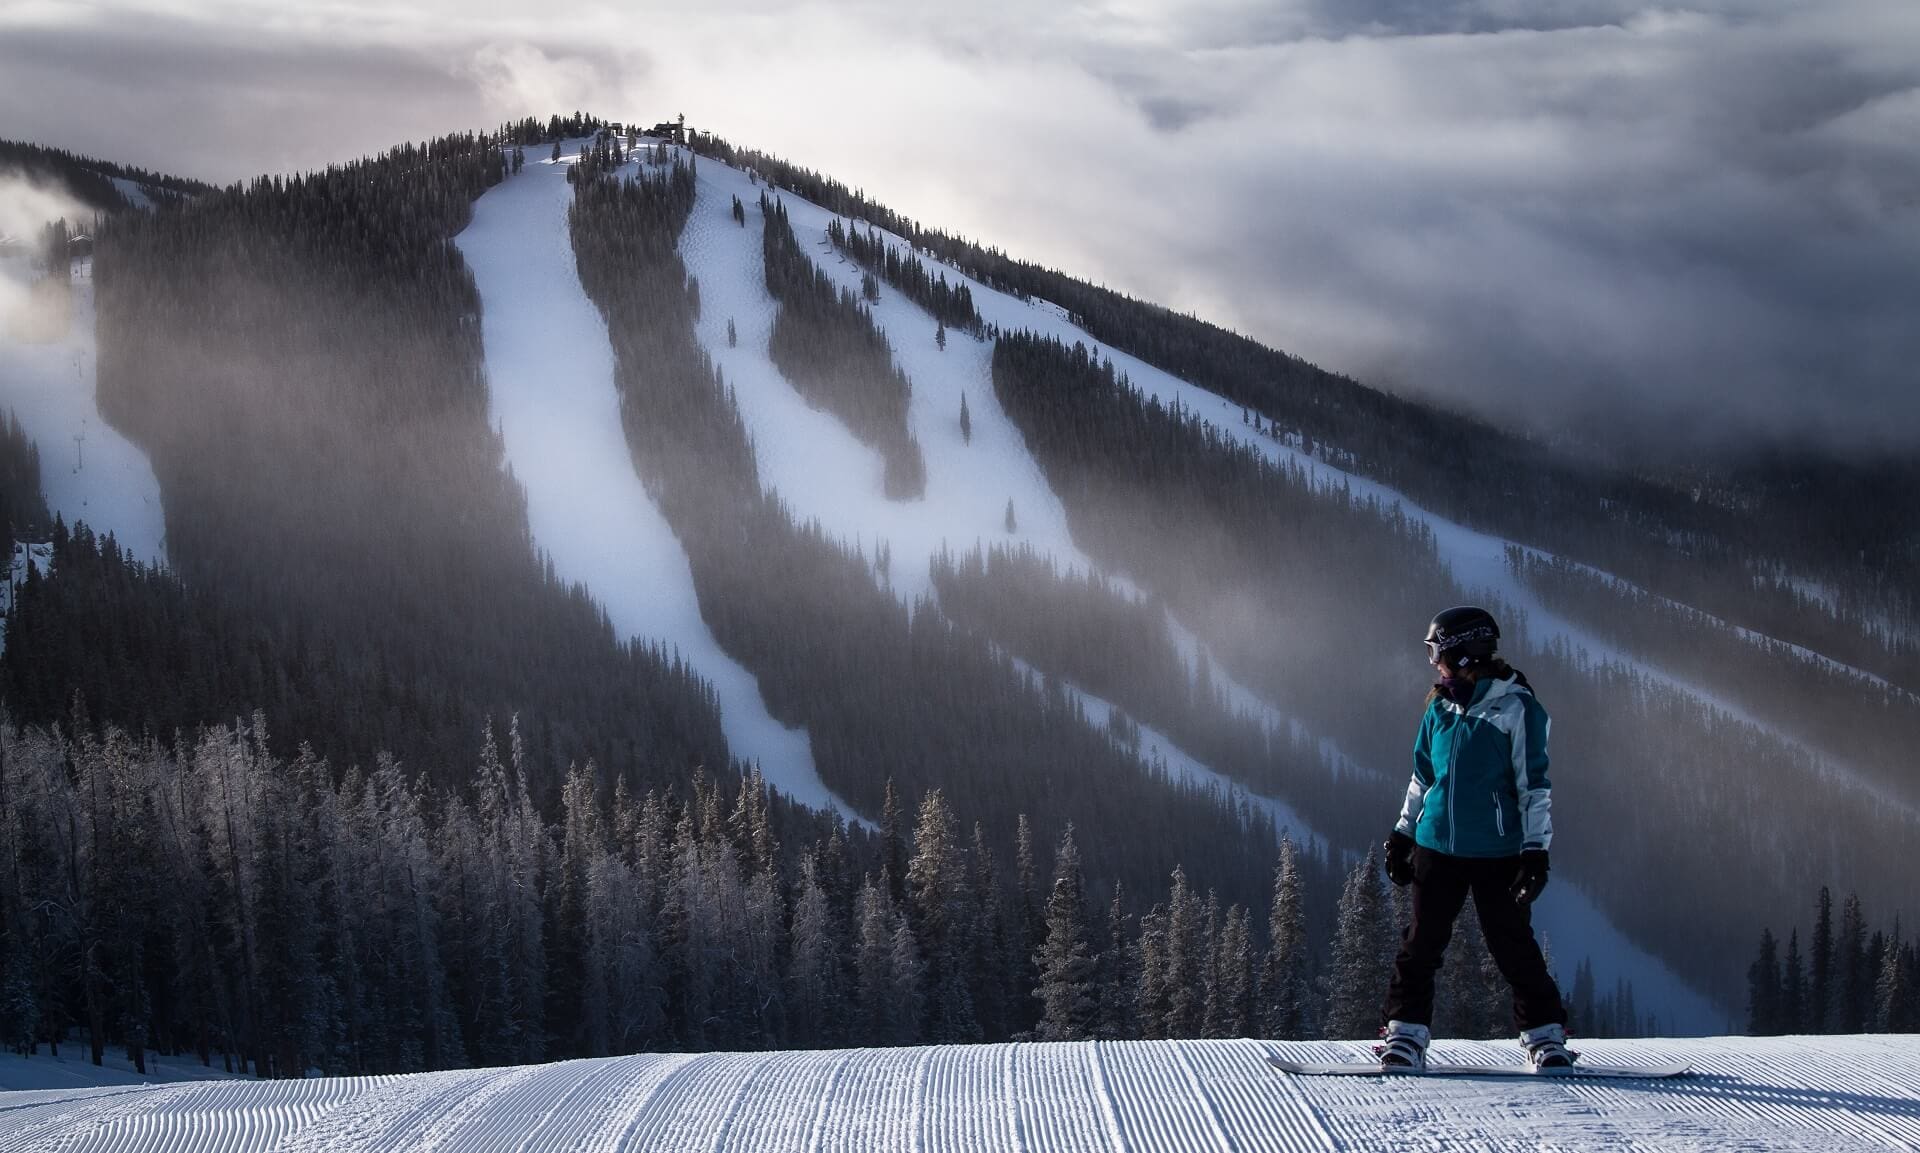 Getting To Keystone Ski Resort, Colorado - Ski Bookings